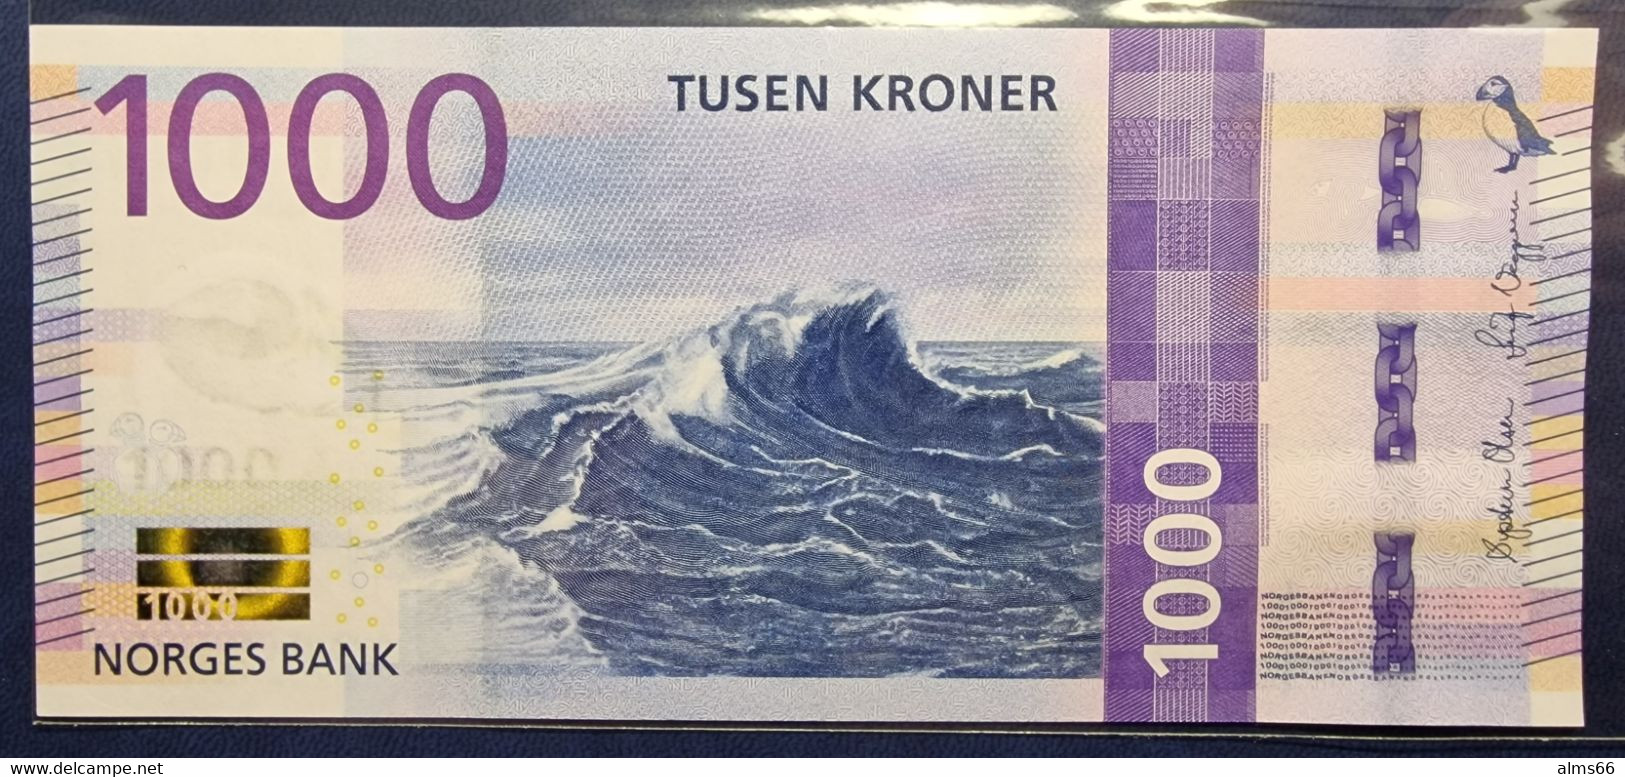 Norway 1000 Kroner 2019 UNC P- 57 - Norvège